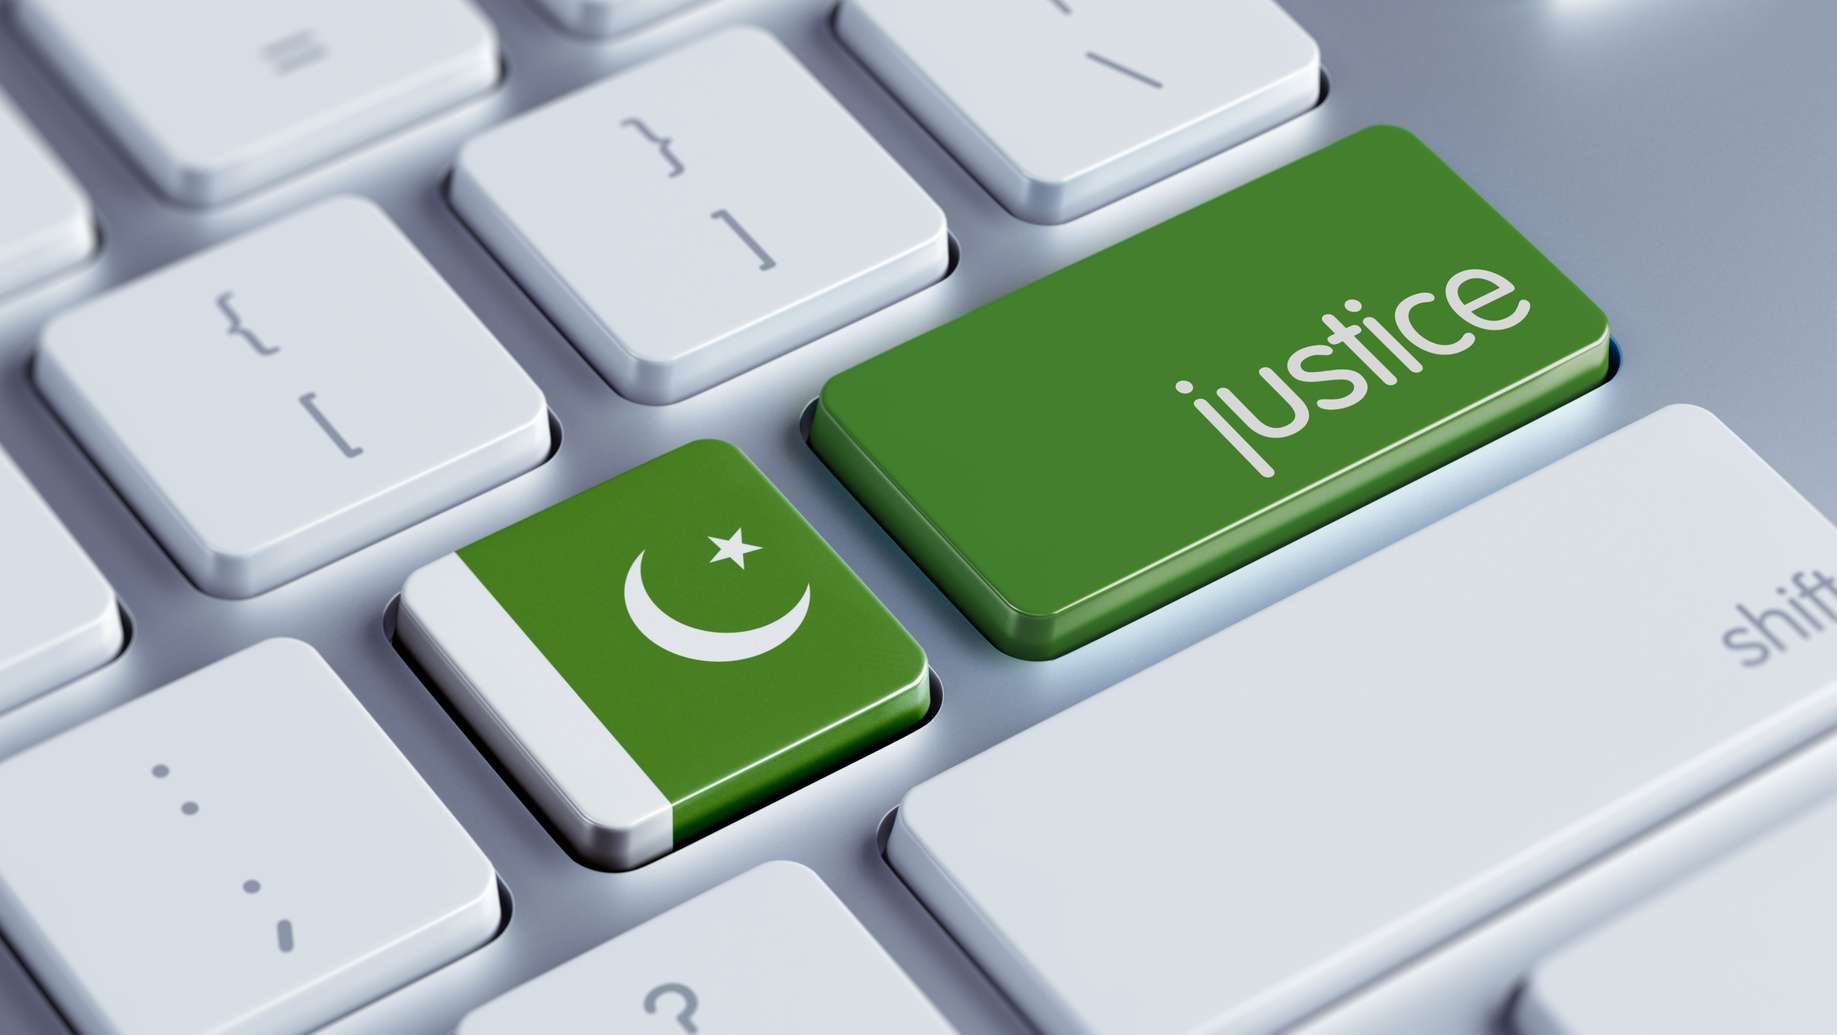 Pakistan Justice Concept